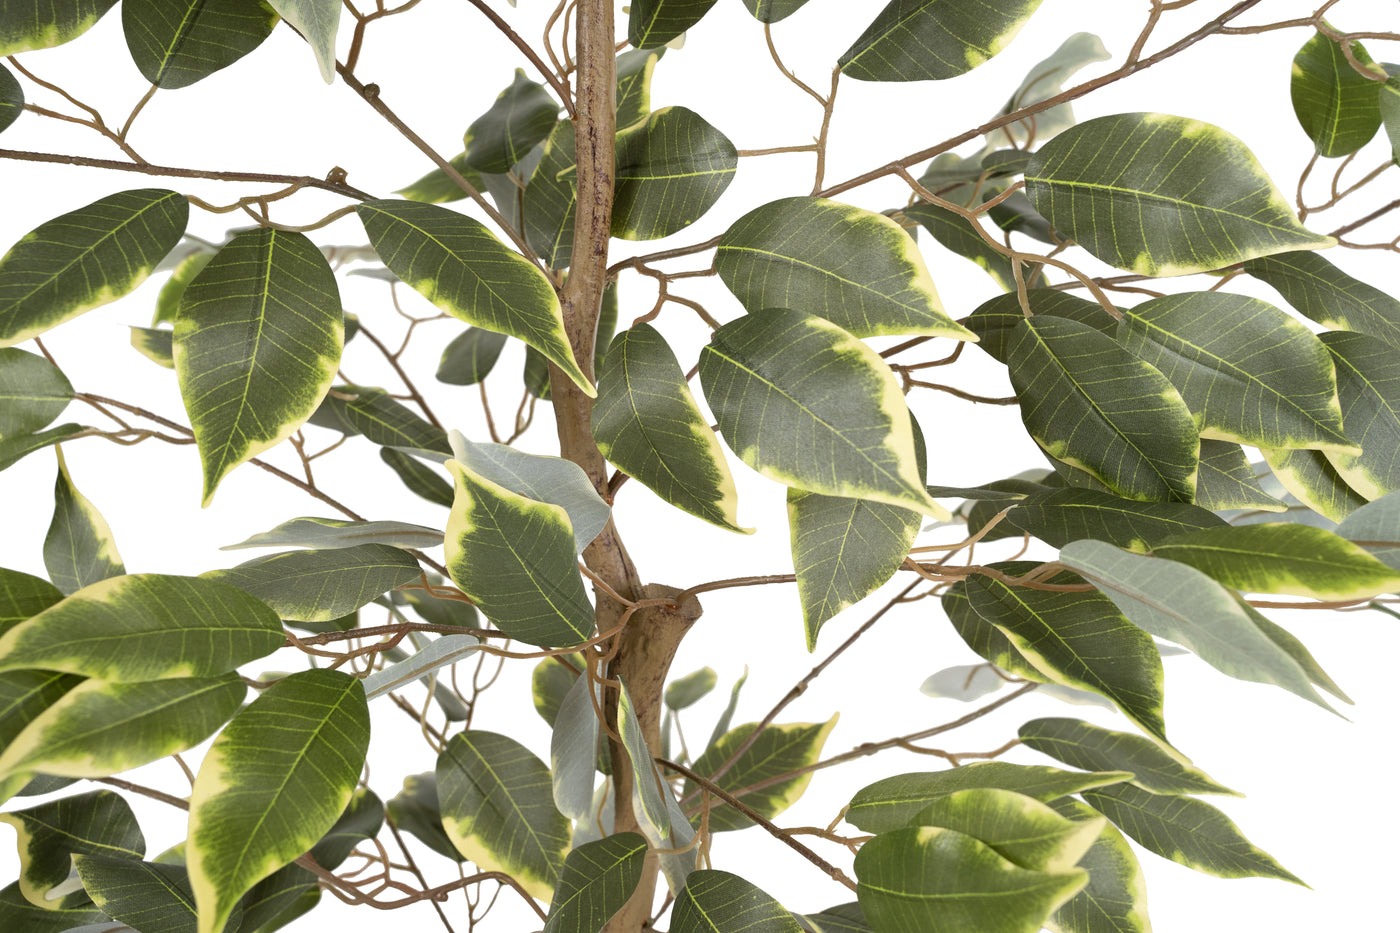 Copac artificial H90cm Ficus benjamina varigat cu 504 frunze verzi